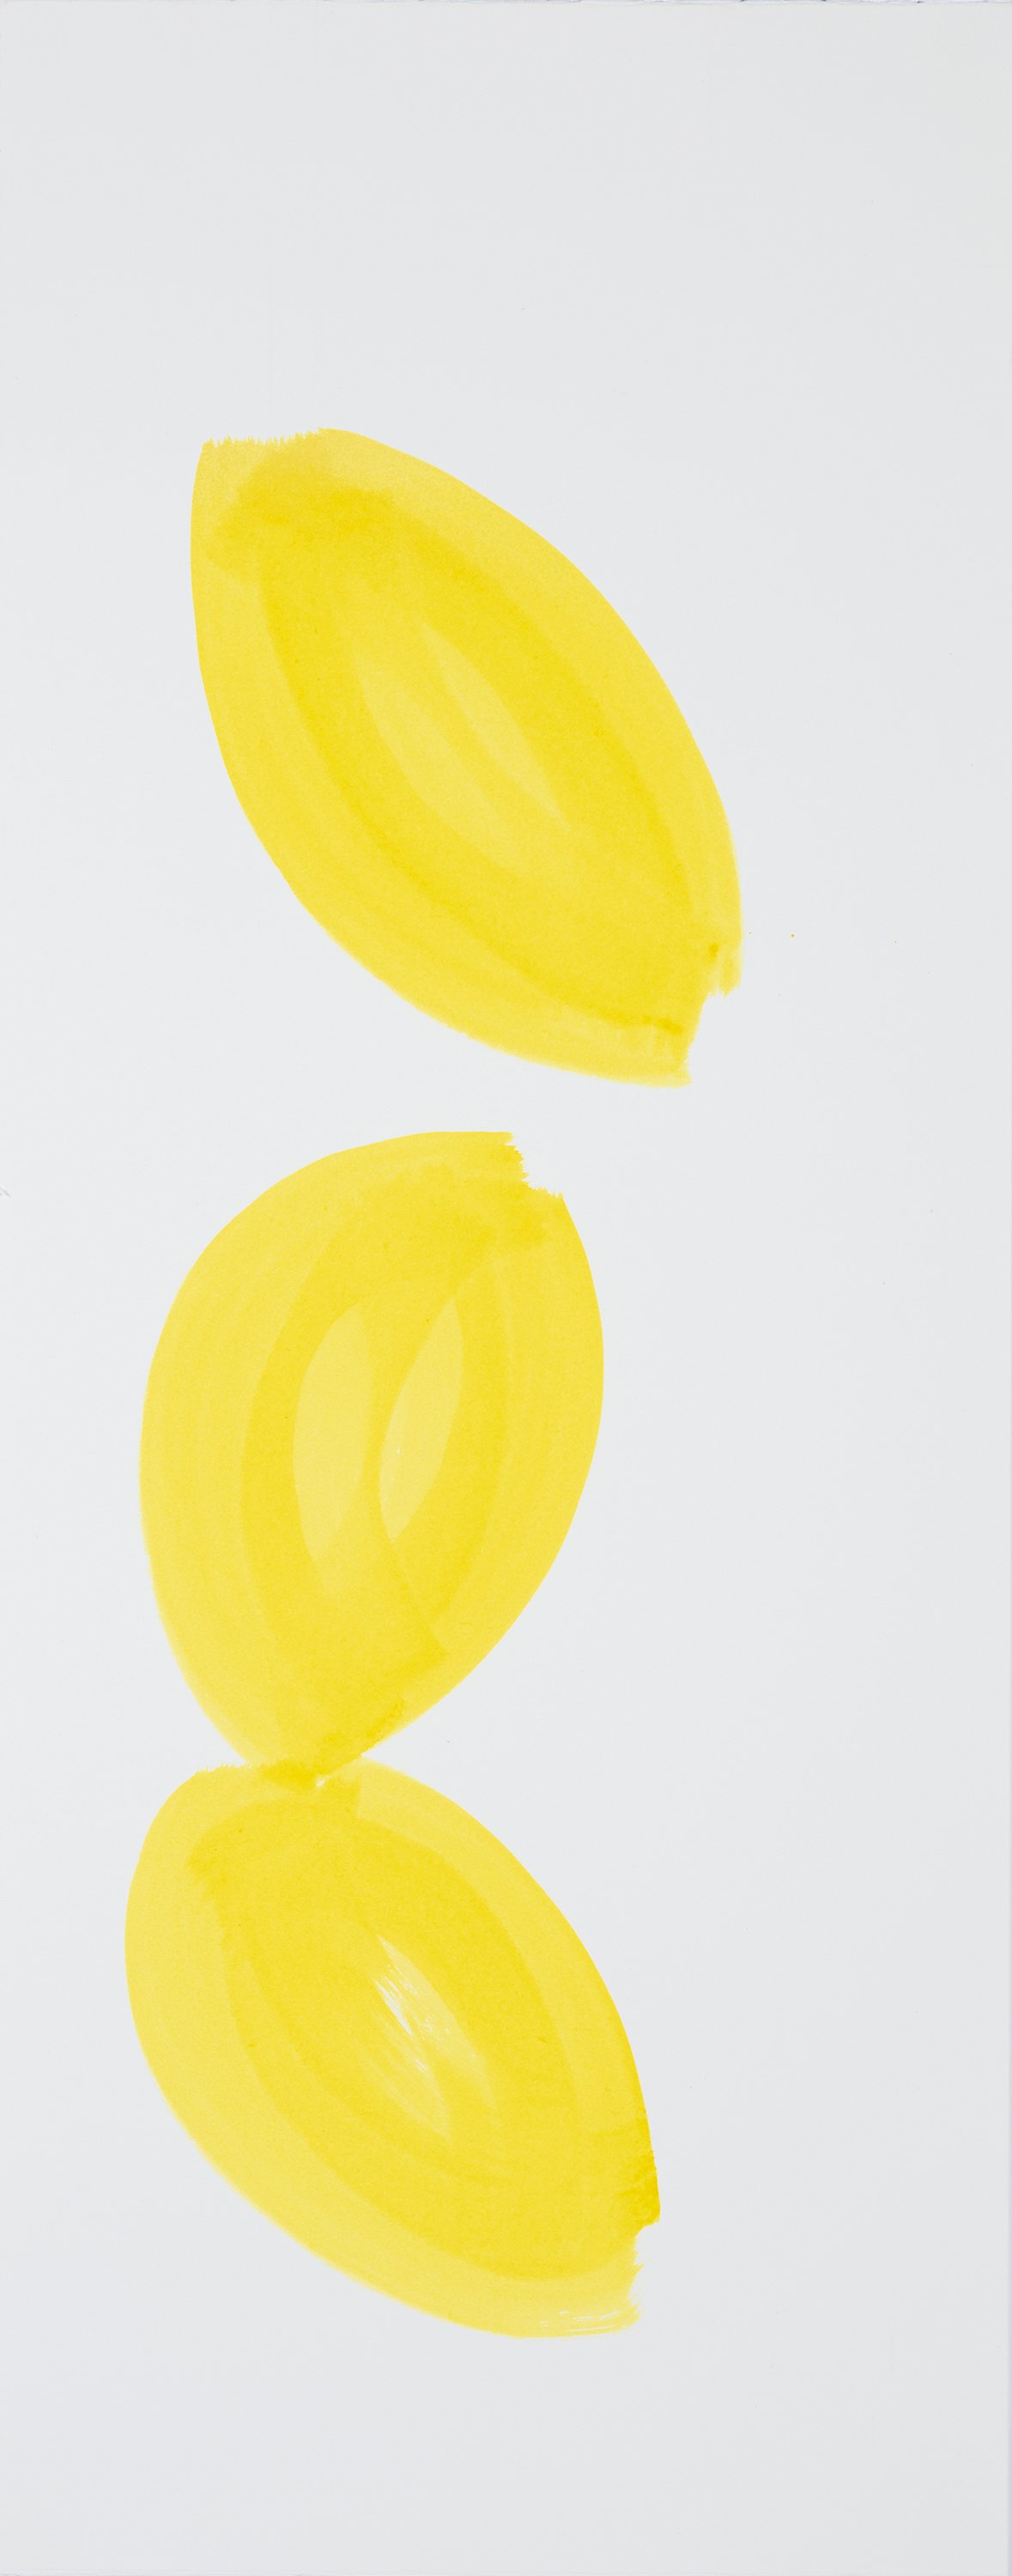 ensō | lemon (05),  2020 | ink on Fabriano paper | 29.5" x 11.75"